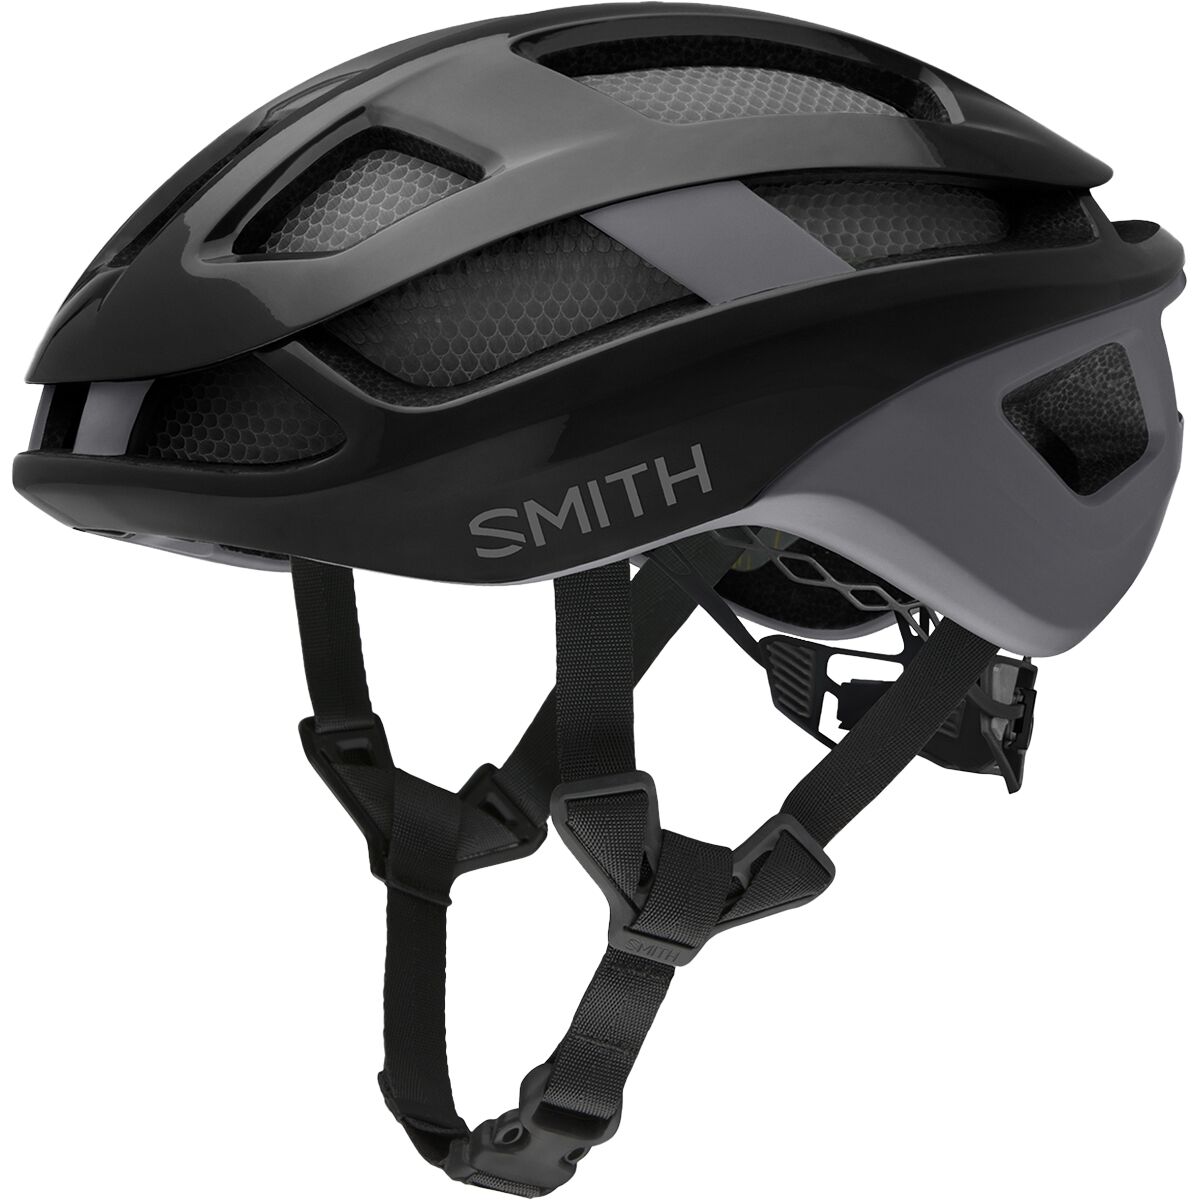 Road Details about   Smith Optics Trace MIPS Bike Matte Black Medium AirEvac Aero Helmet 